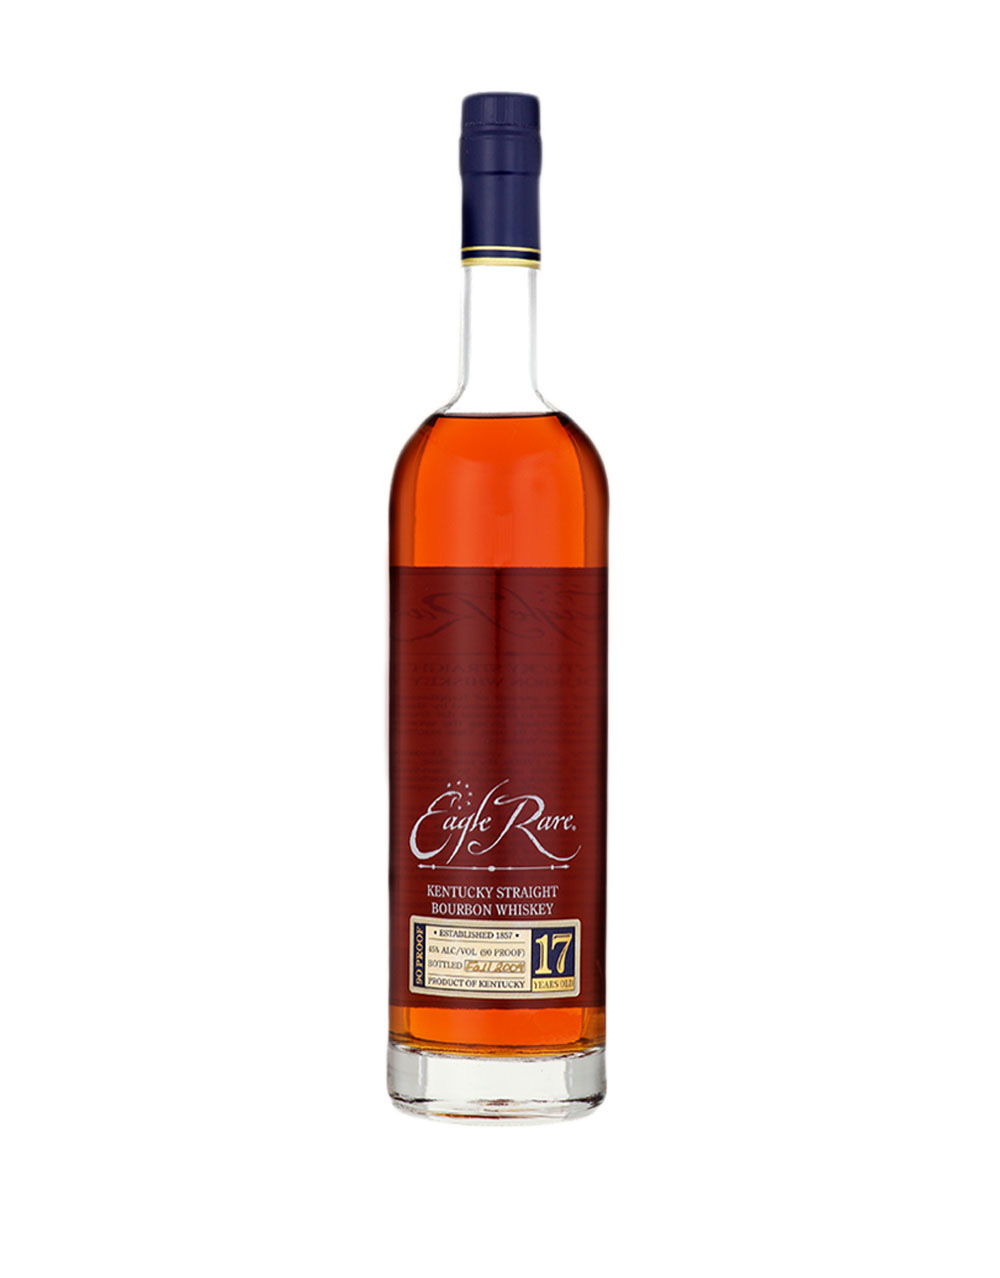 The Glenlivet Single Cask Pullman Club Car Single Malt Scotch Whisky